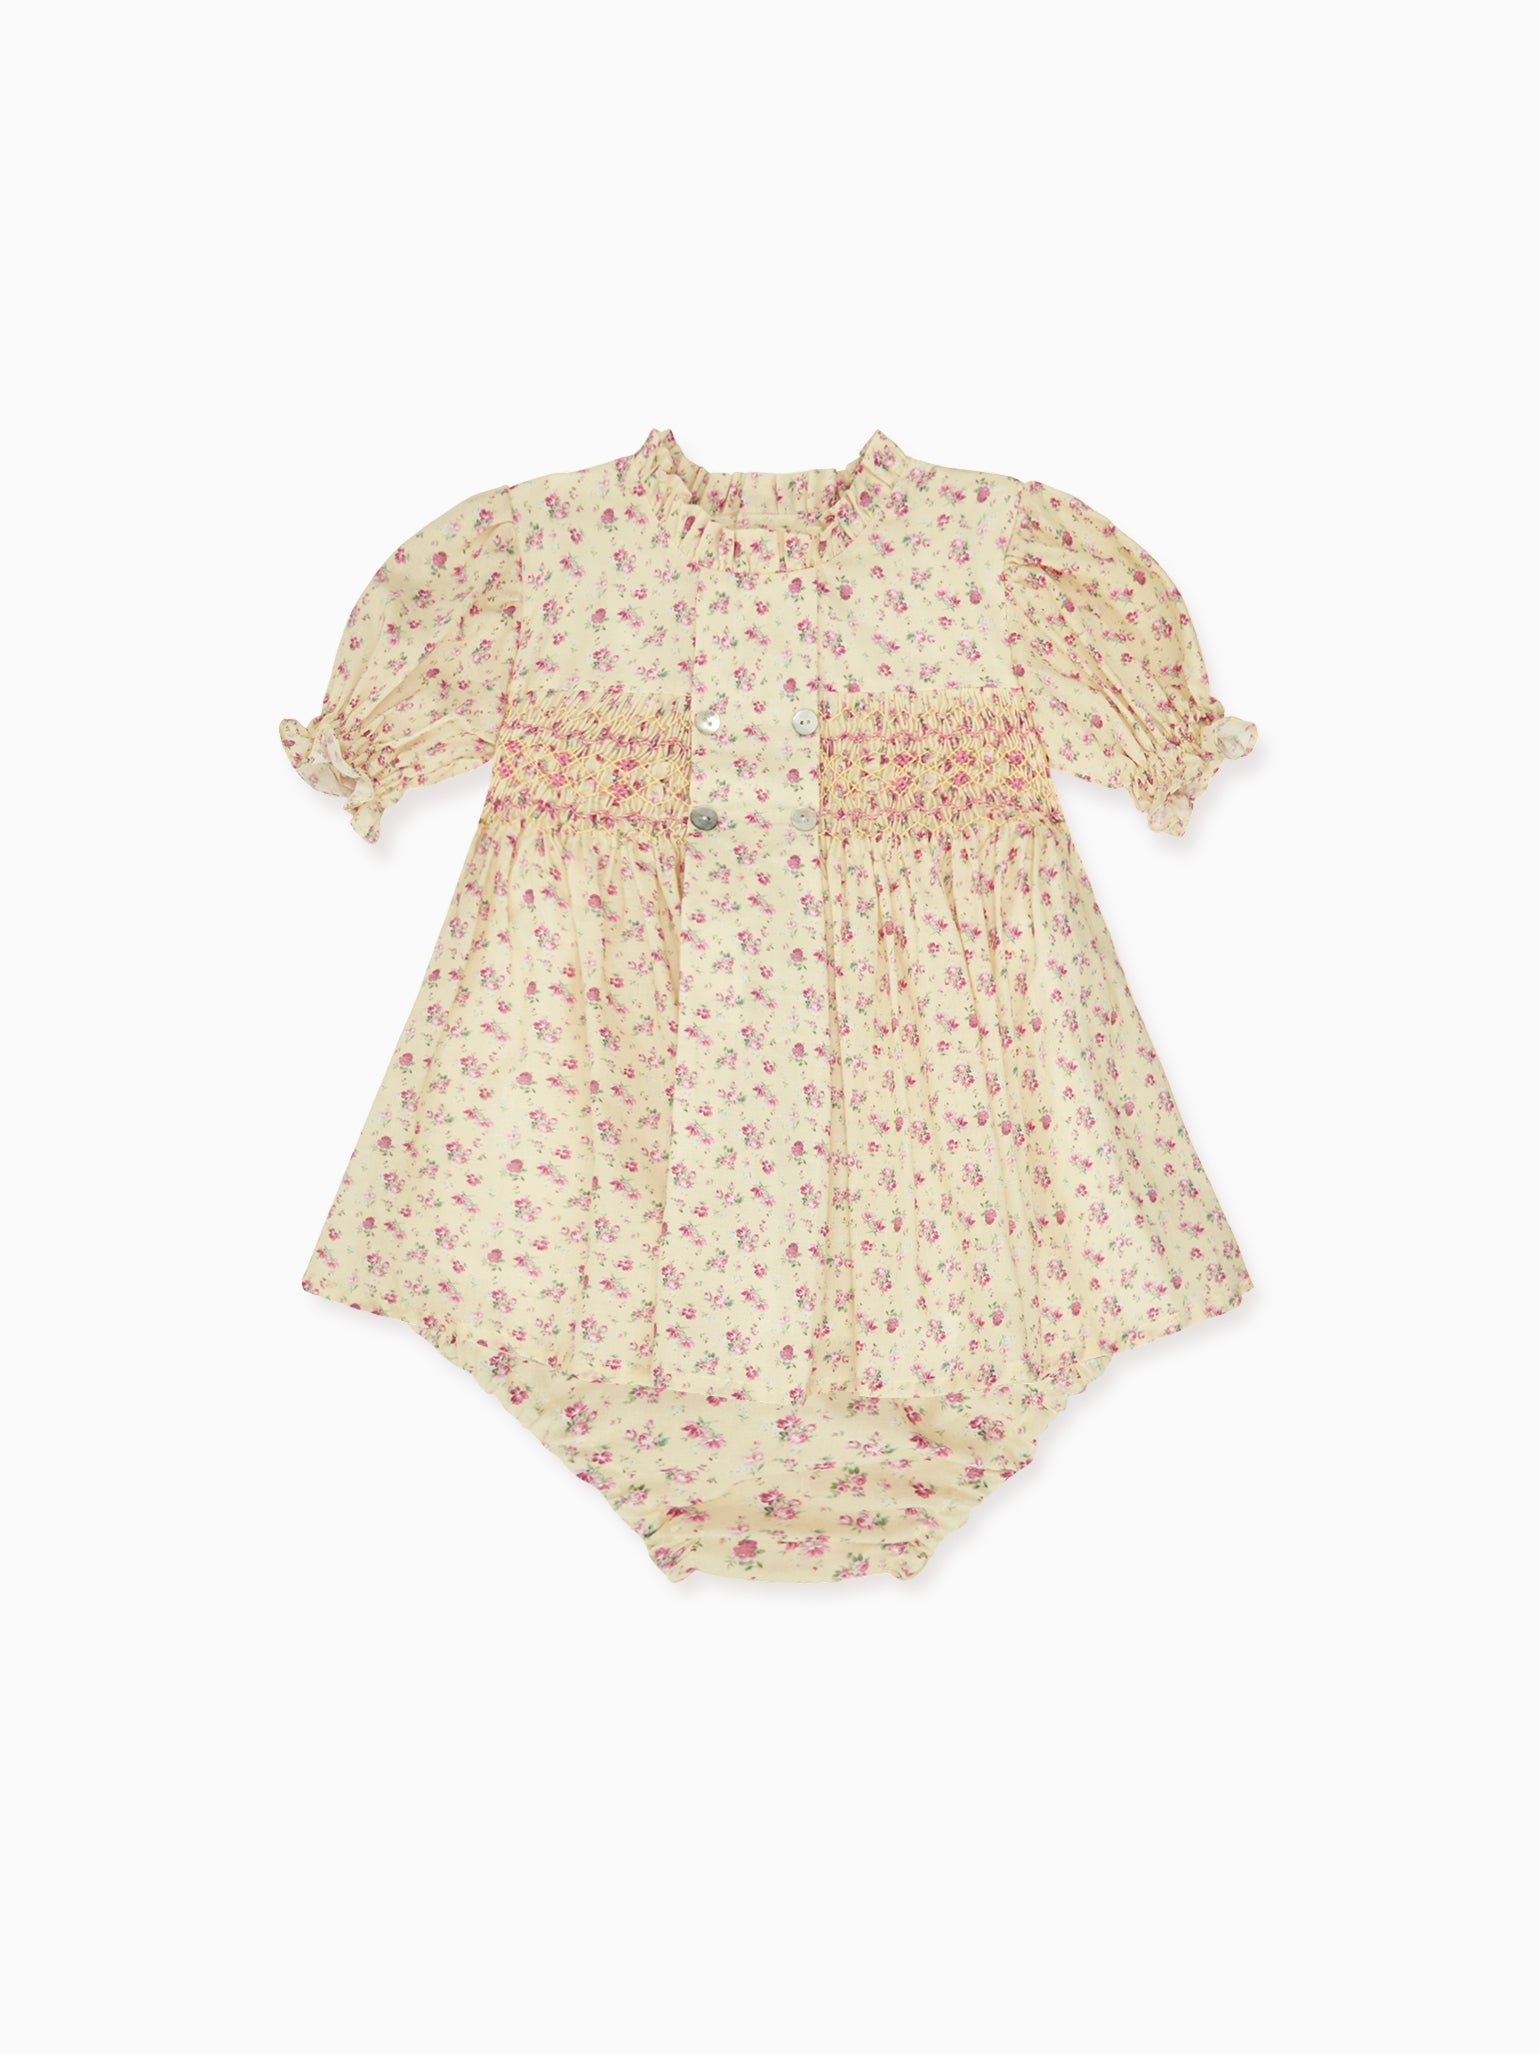 EAPONYEEW Baby Girl Clothes Shorts Outfits Sets 6 9 12 18 Months Baby Girl  Clothing Sets, Pink, 6-9 months price in Saudi Arabia | Amazon Saudi Arabia  | kanbkam